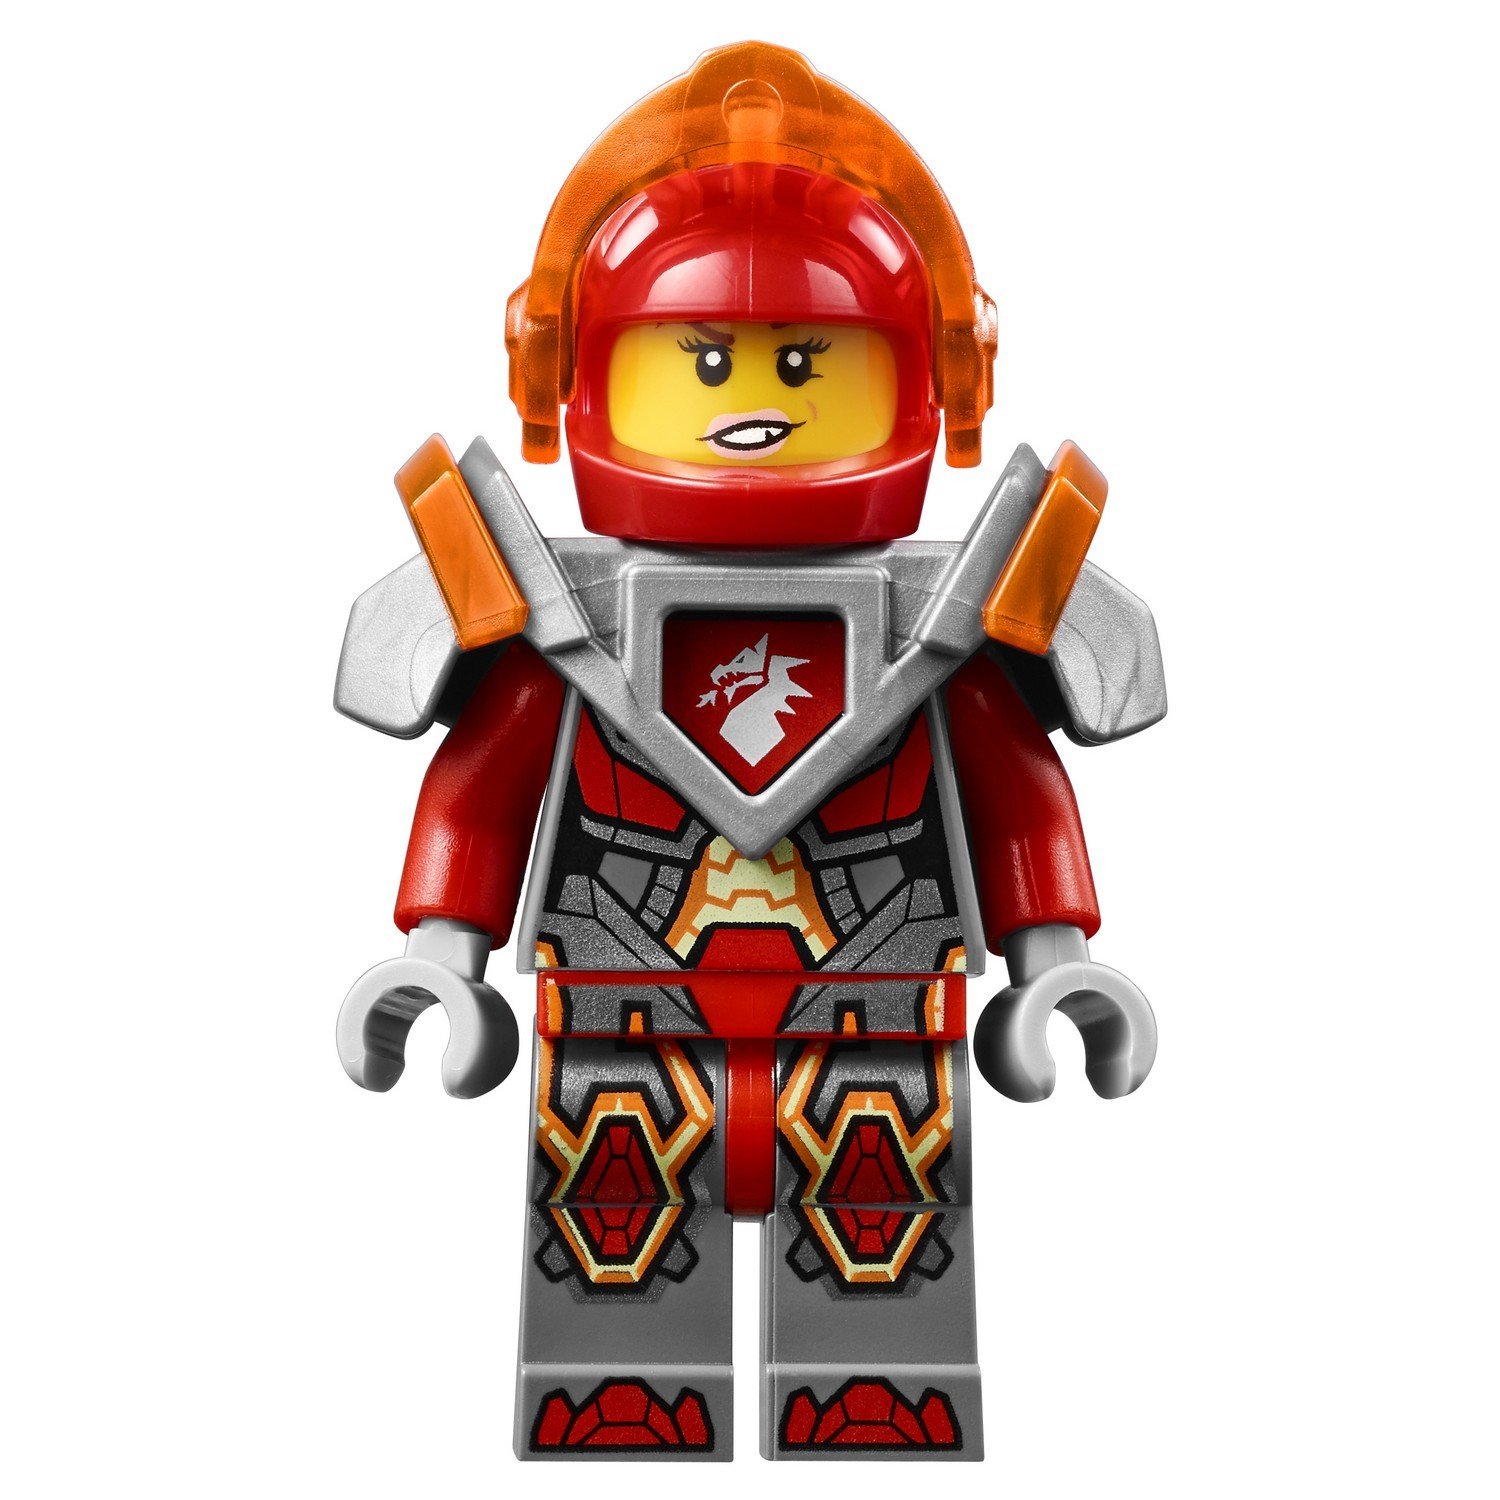 Lego Nexo Knights 70361 Дракон Мэйси